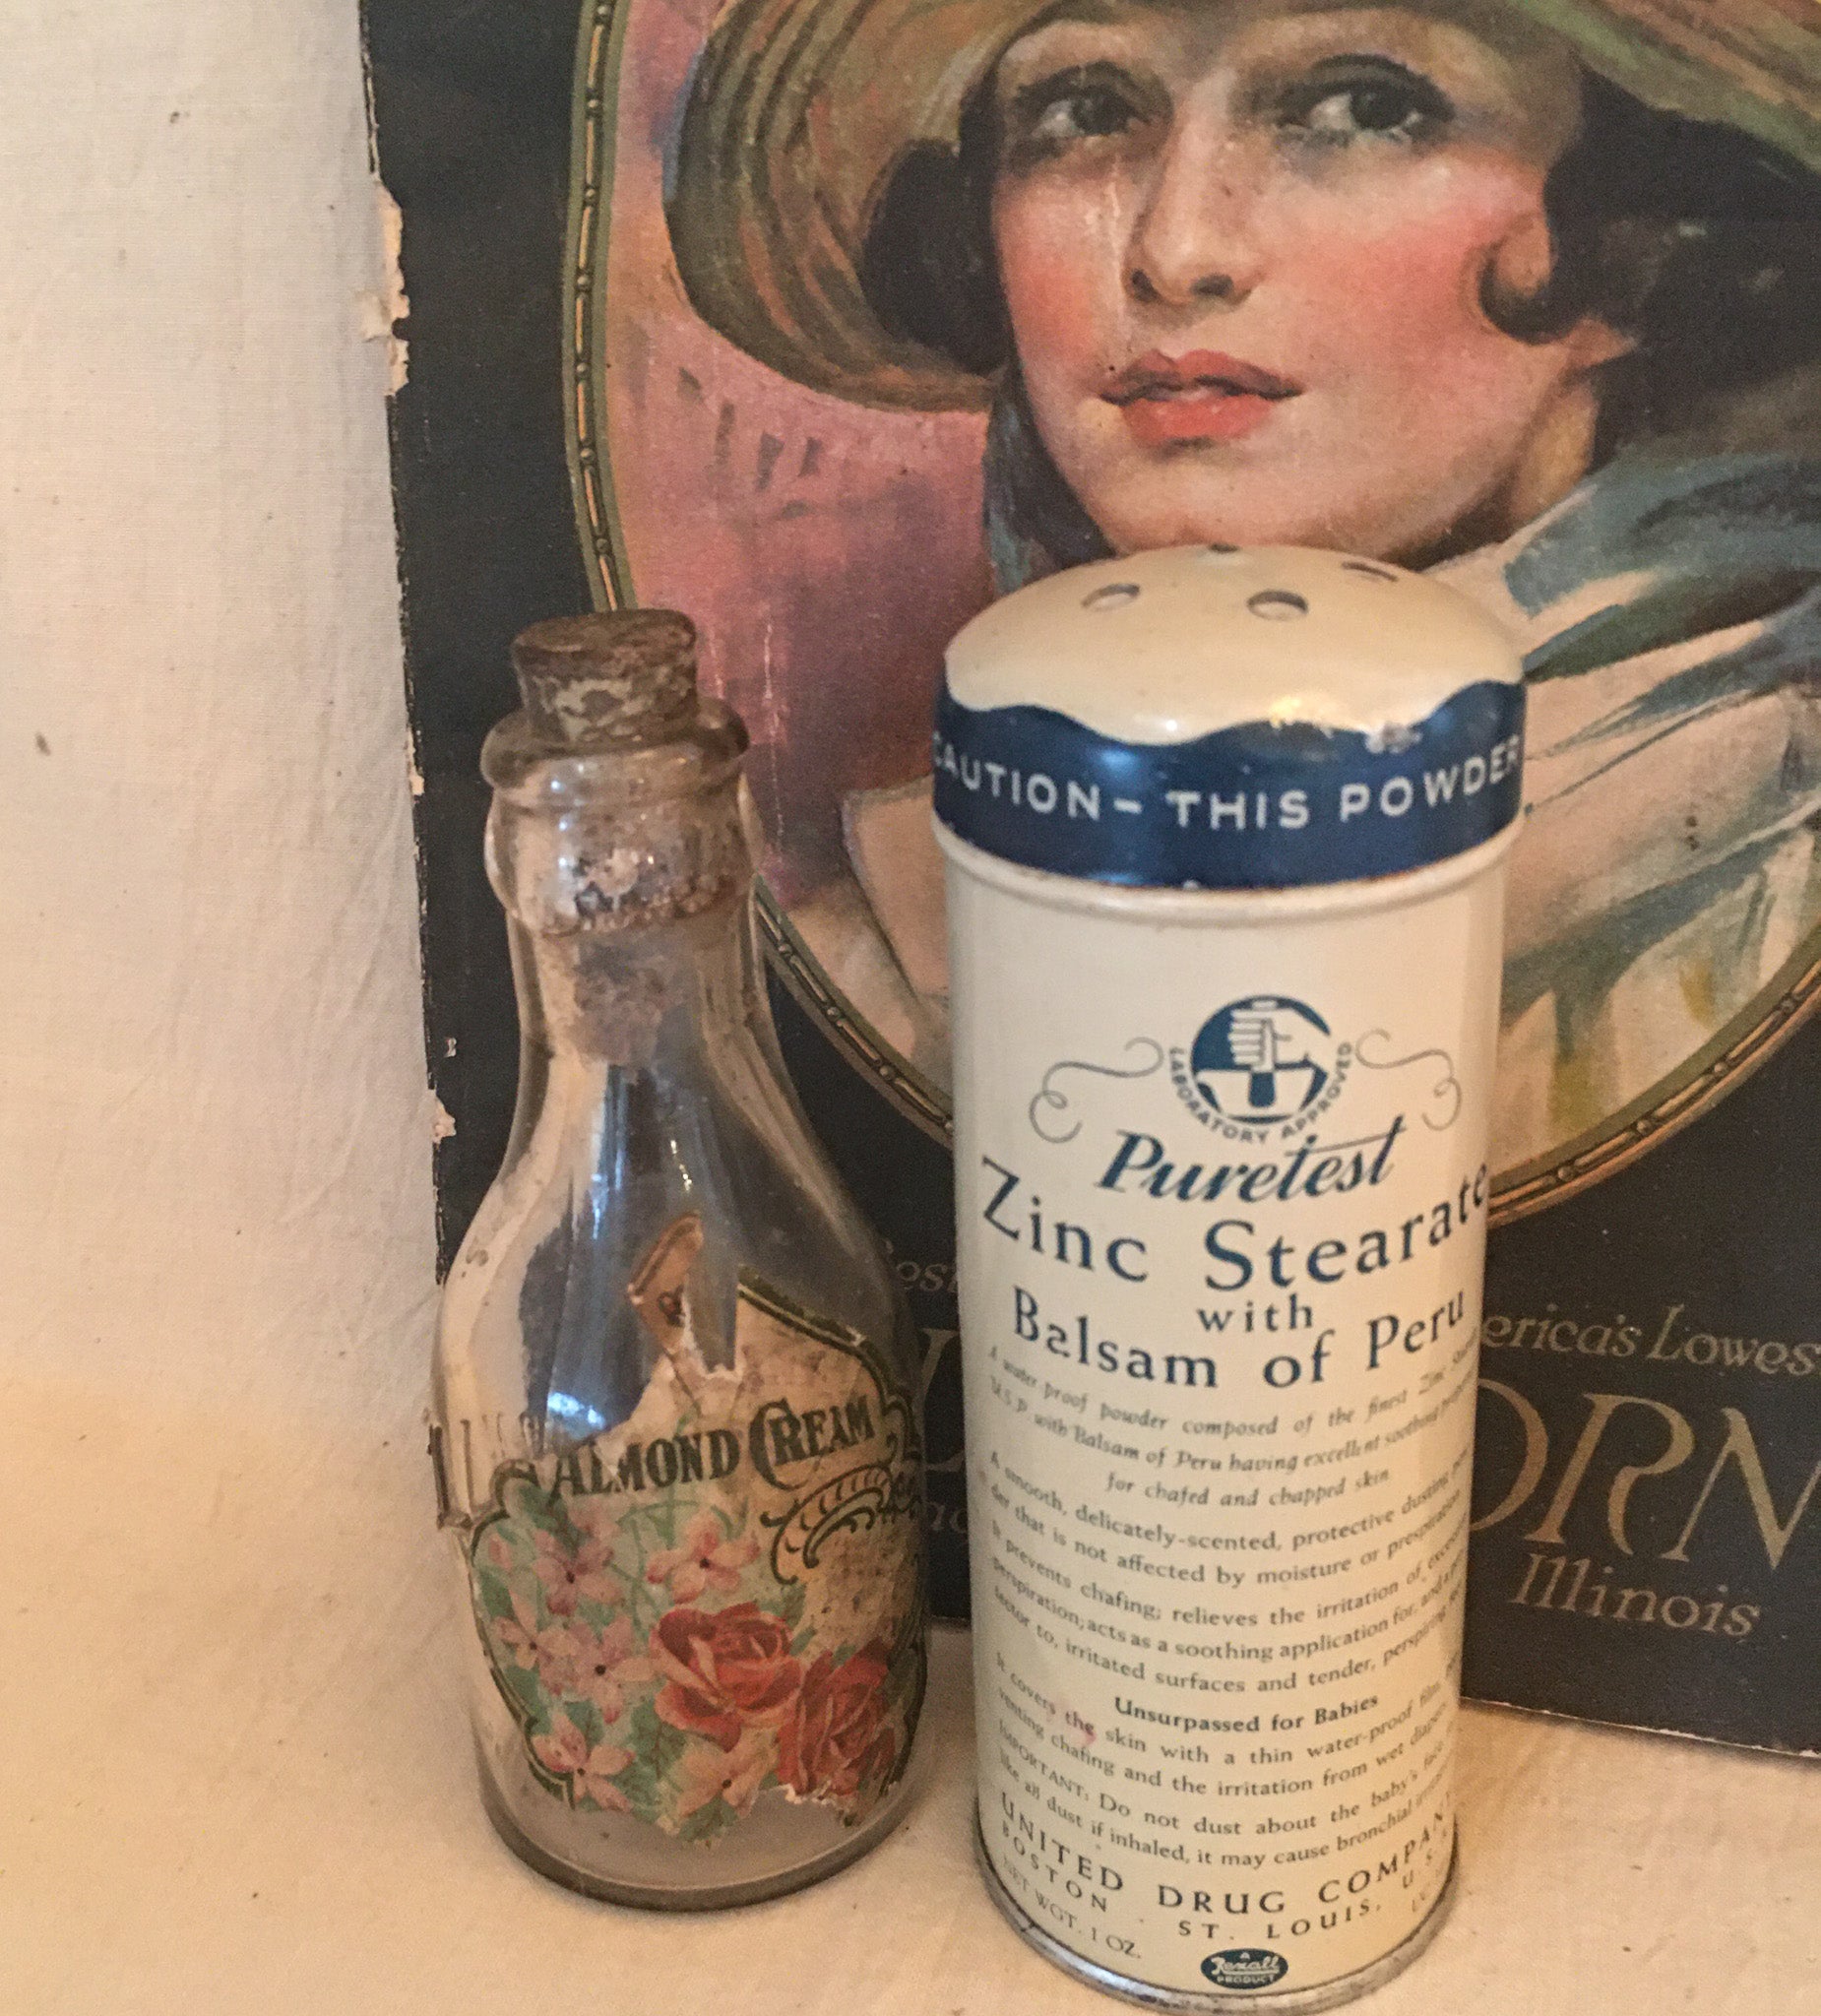 1920’s Puretest Powder Tin and 1800’s Randall Almond Cream Bottle